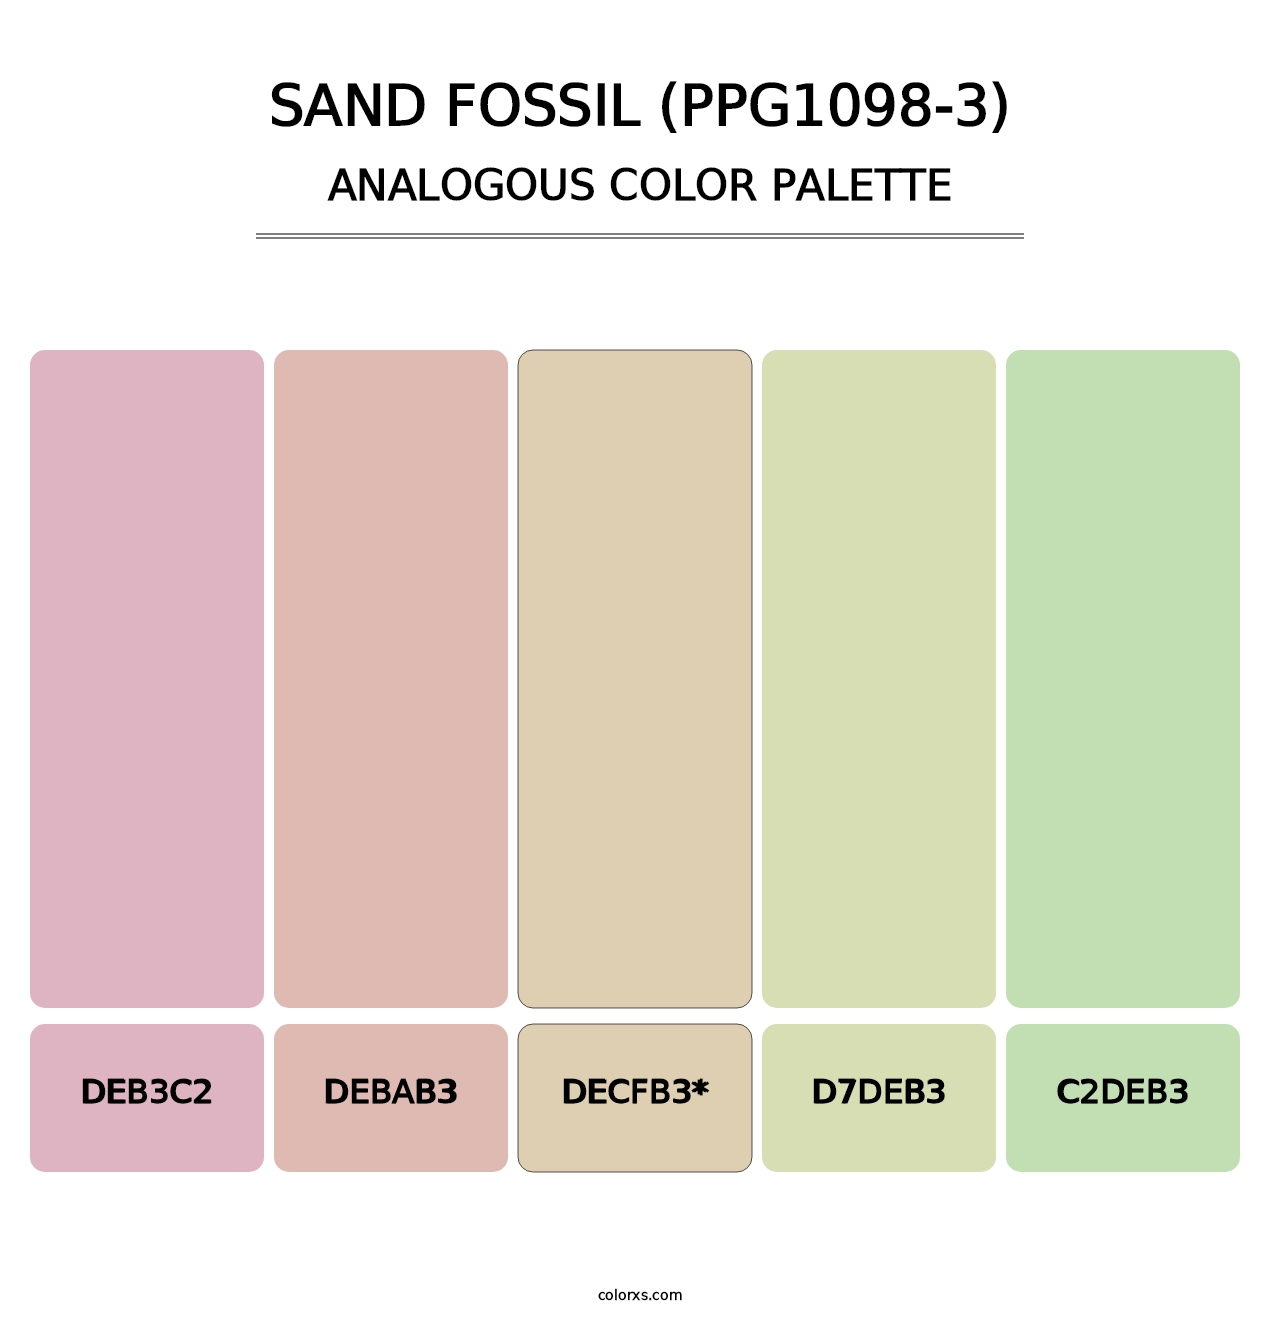 Sand Fossil (PPG1098-3) - Analogous Color Palette